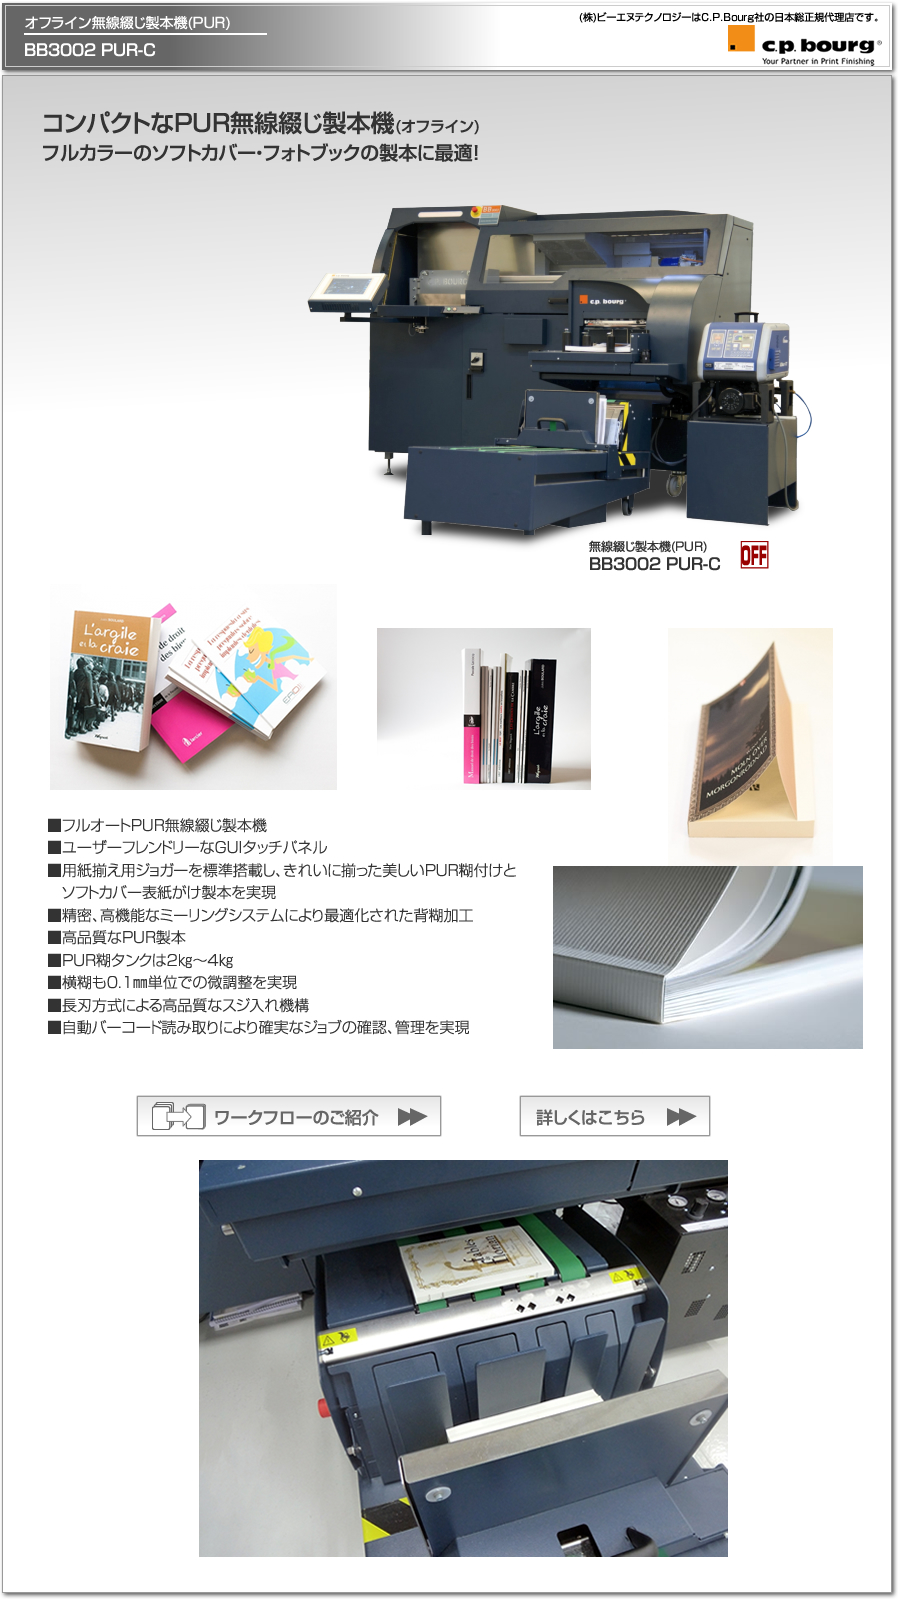 CP Bourg社のデジタル印刷機（オンデマンド印刷機）対応の無線綴じ製本機(PUR)、BB3002 PUR-C、オフライン設置。